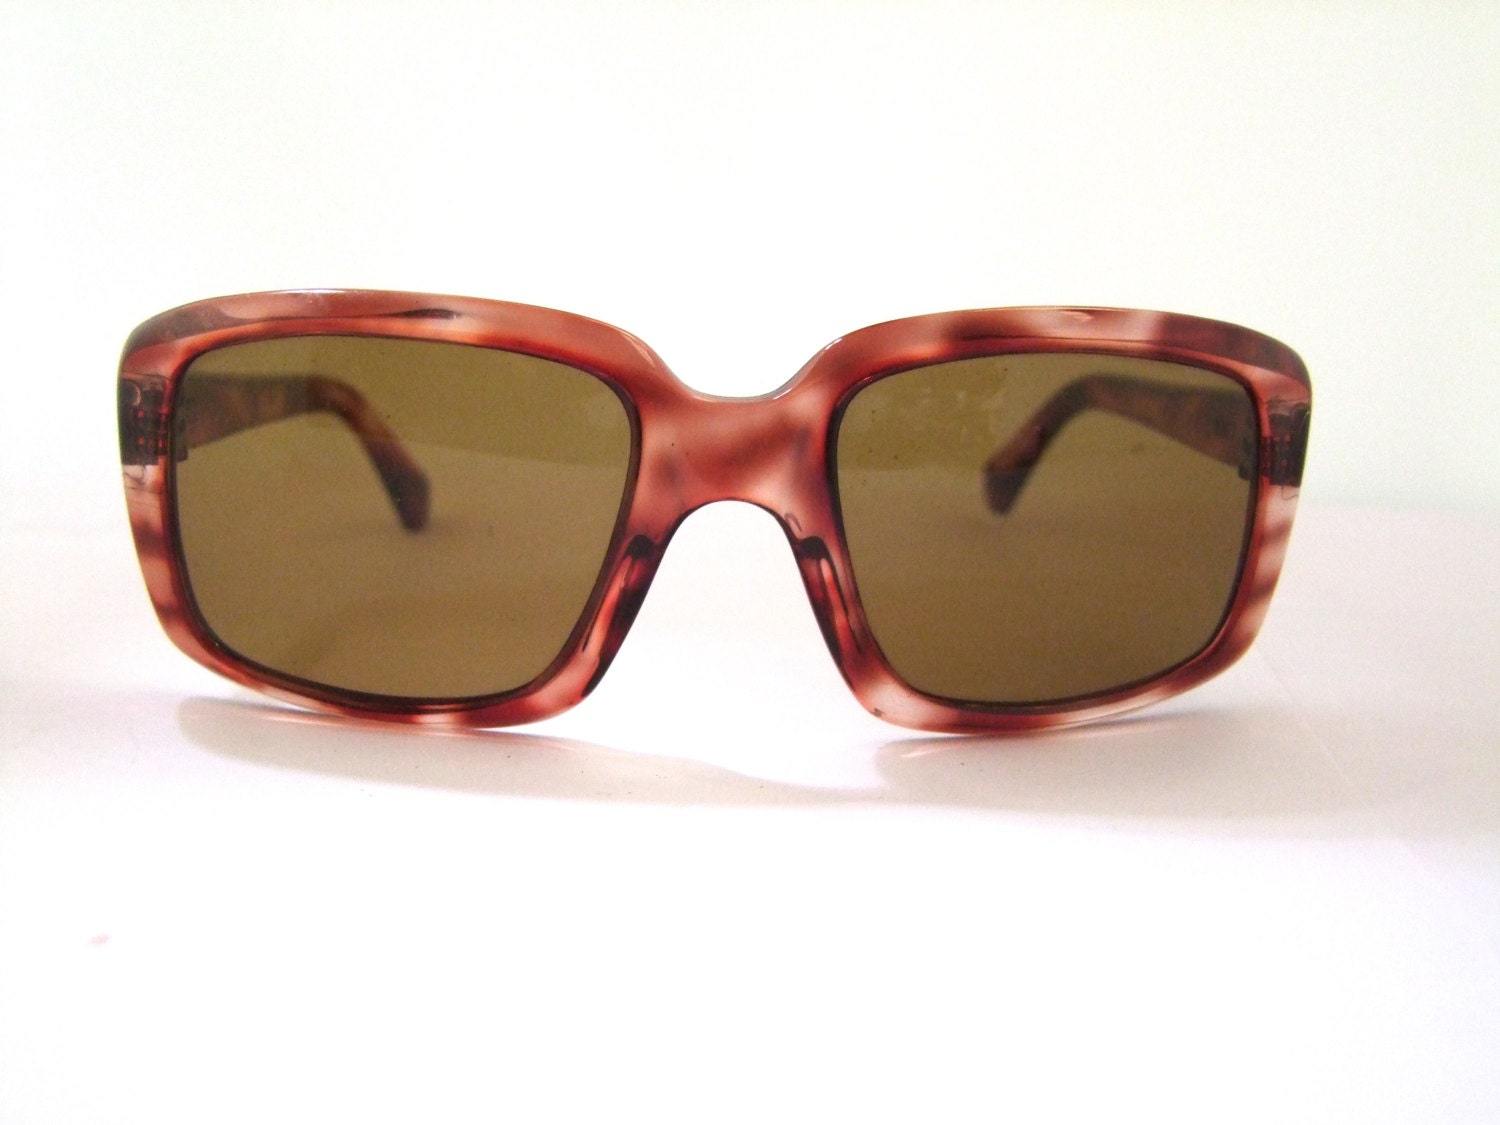 1960s Sunglasses 60s Vintage Frames Tortoiseshell